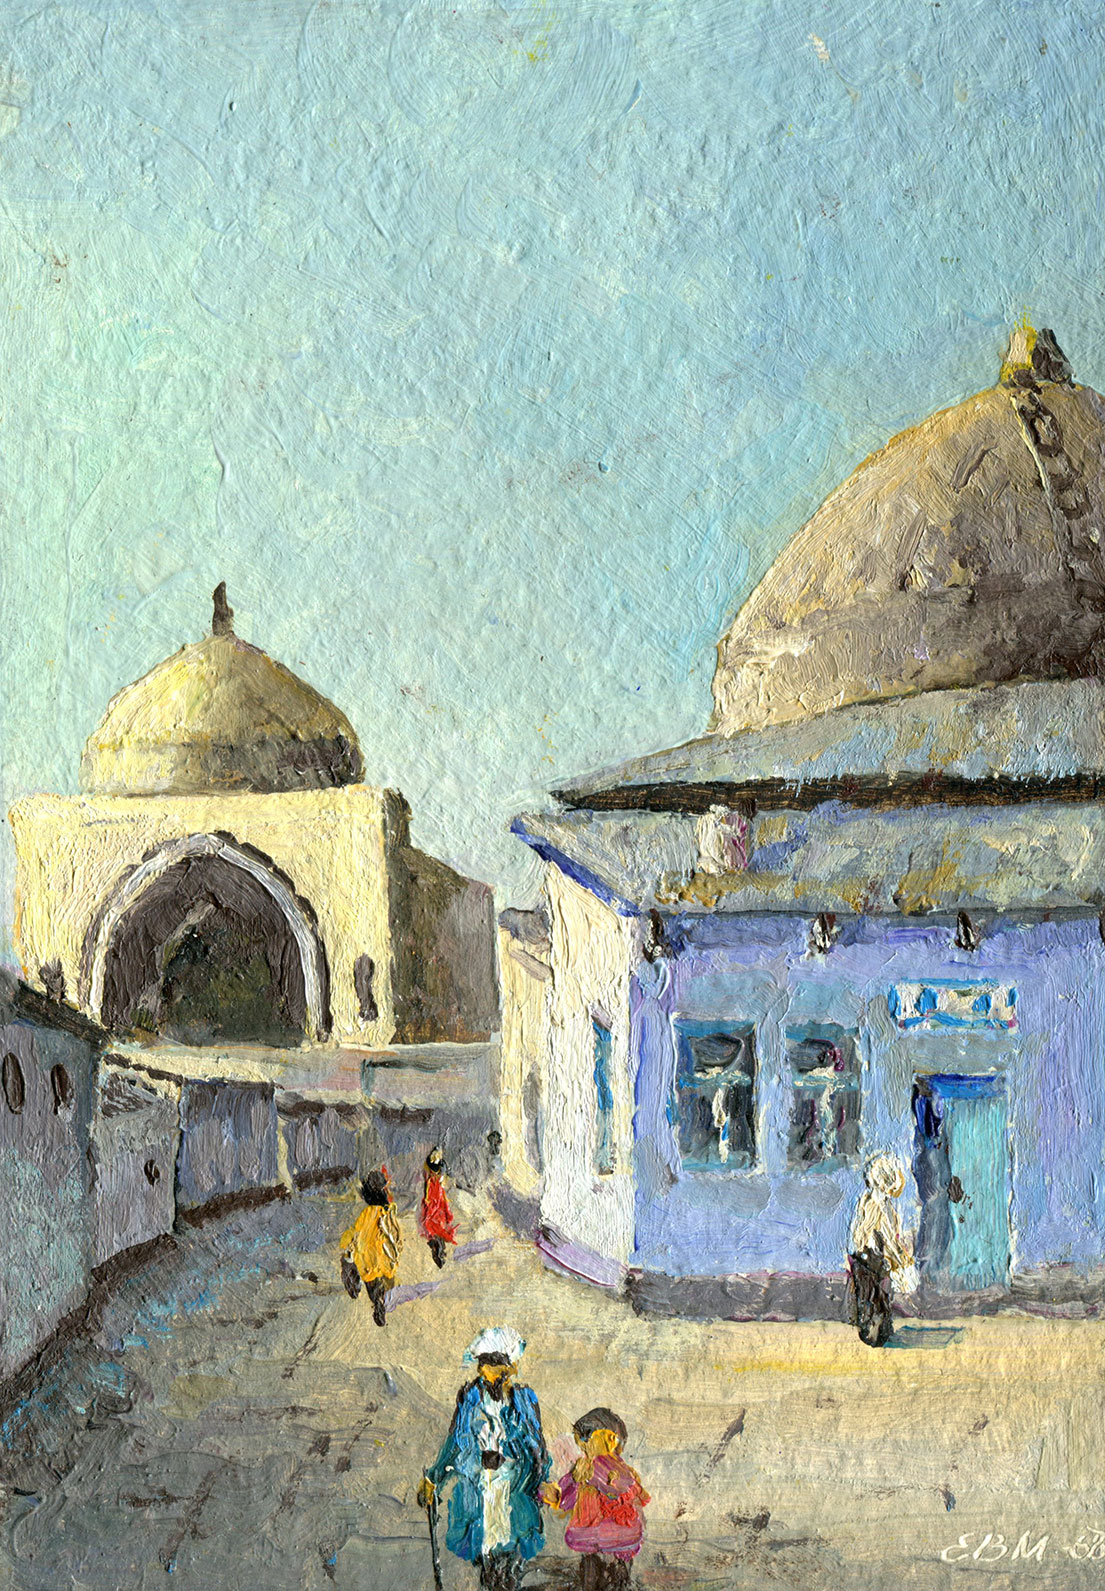  Uzbekistan, Tashkent. Old Town, Jami Cathedral Mosque - 1, Valentin Efremov, Buy the painting Oil